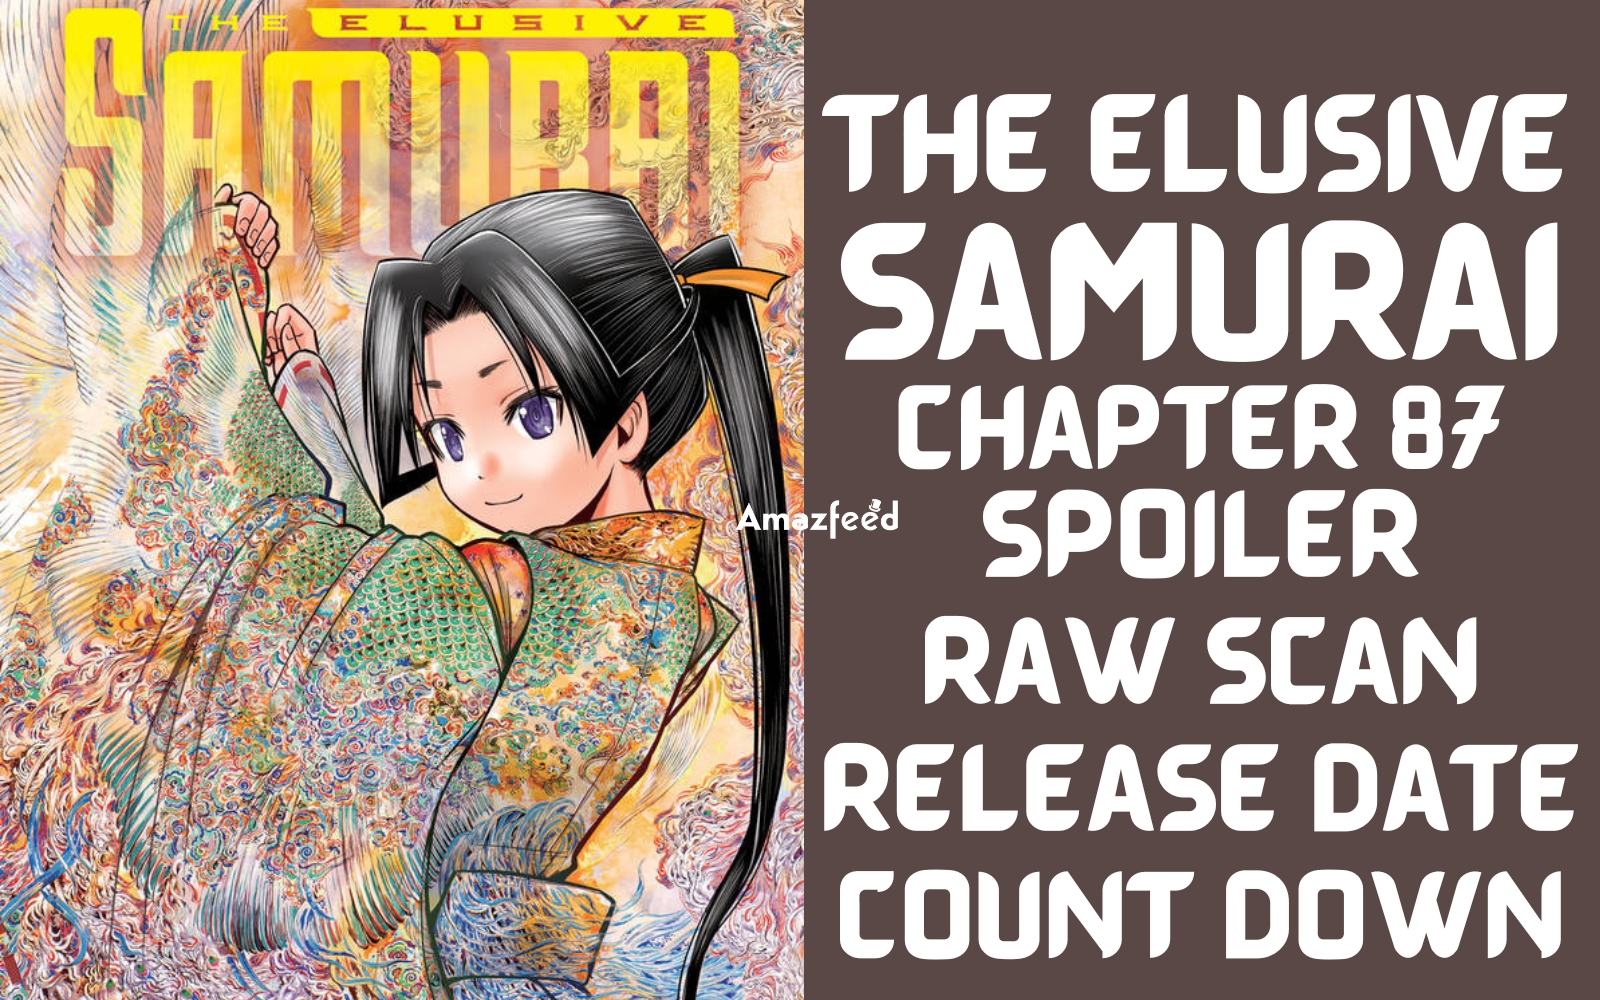 The Elusive Samurai Chapter 87 Spoiler, Release Date, Raw Scan, CountDown